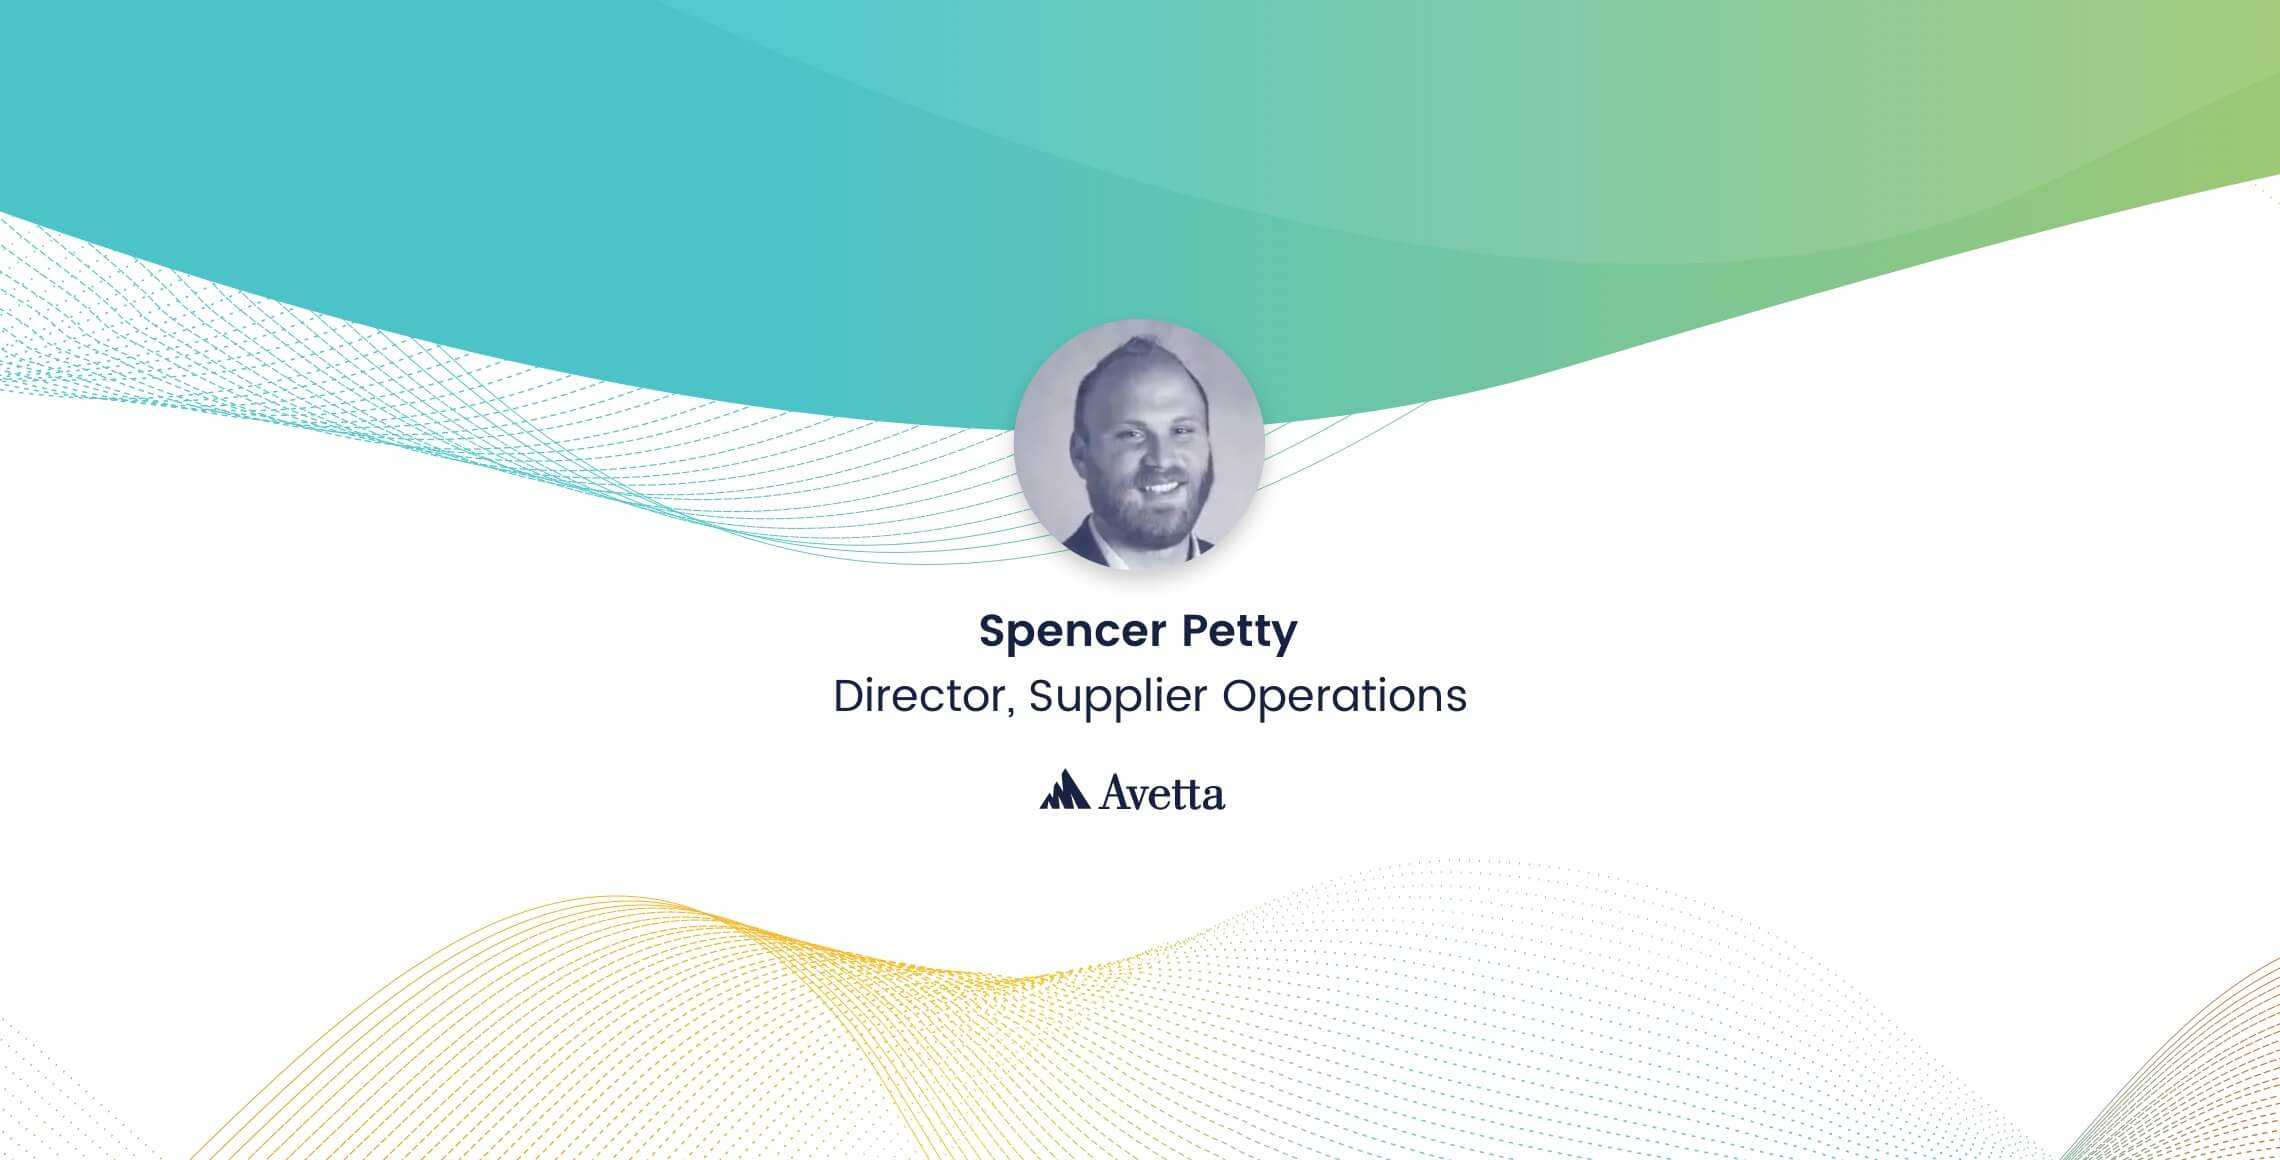 Spencer Petty, Director of Supplier Operations, Avetta